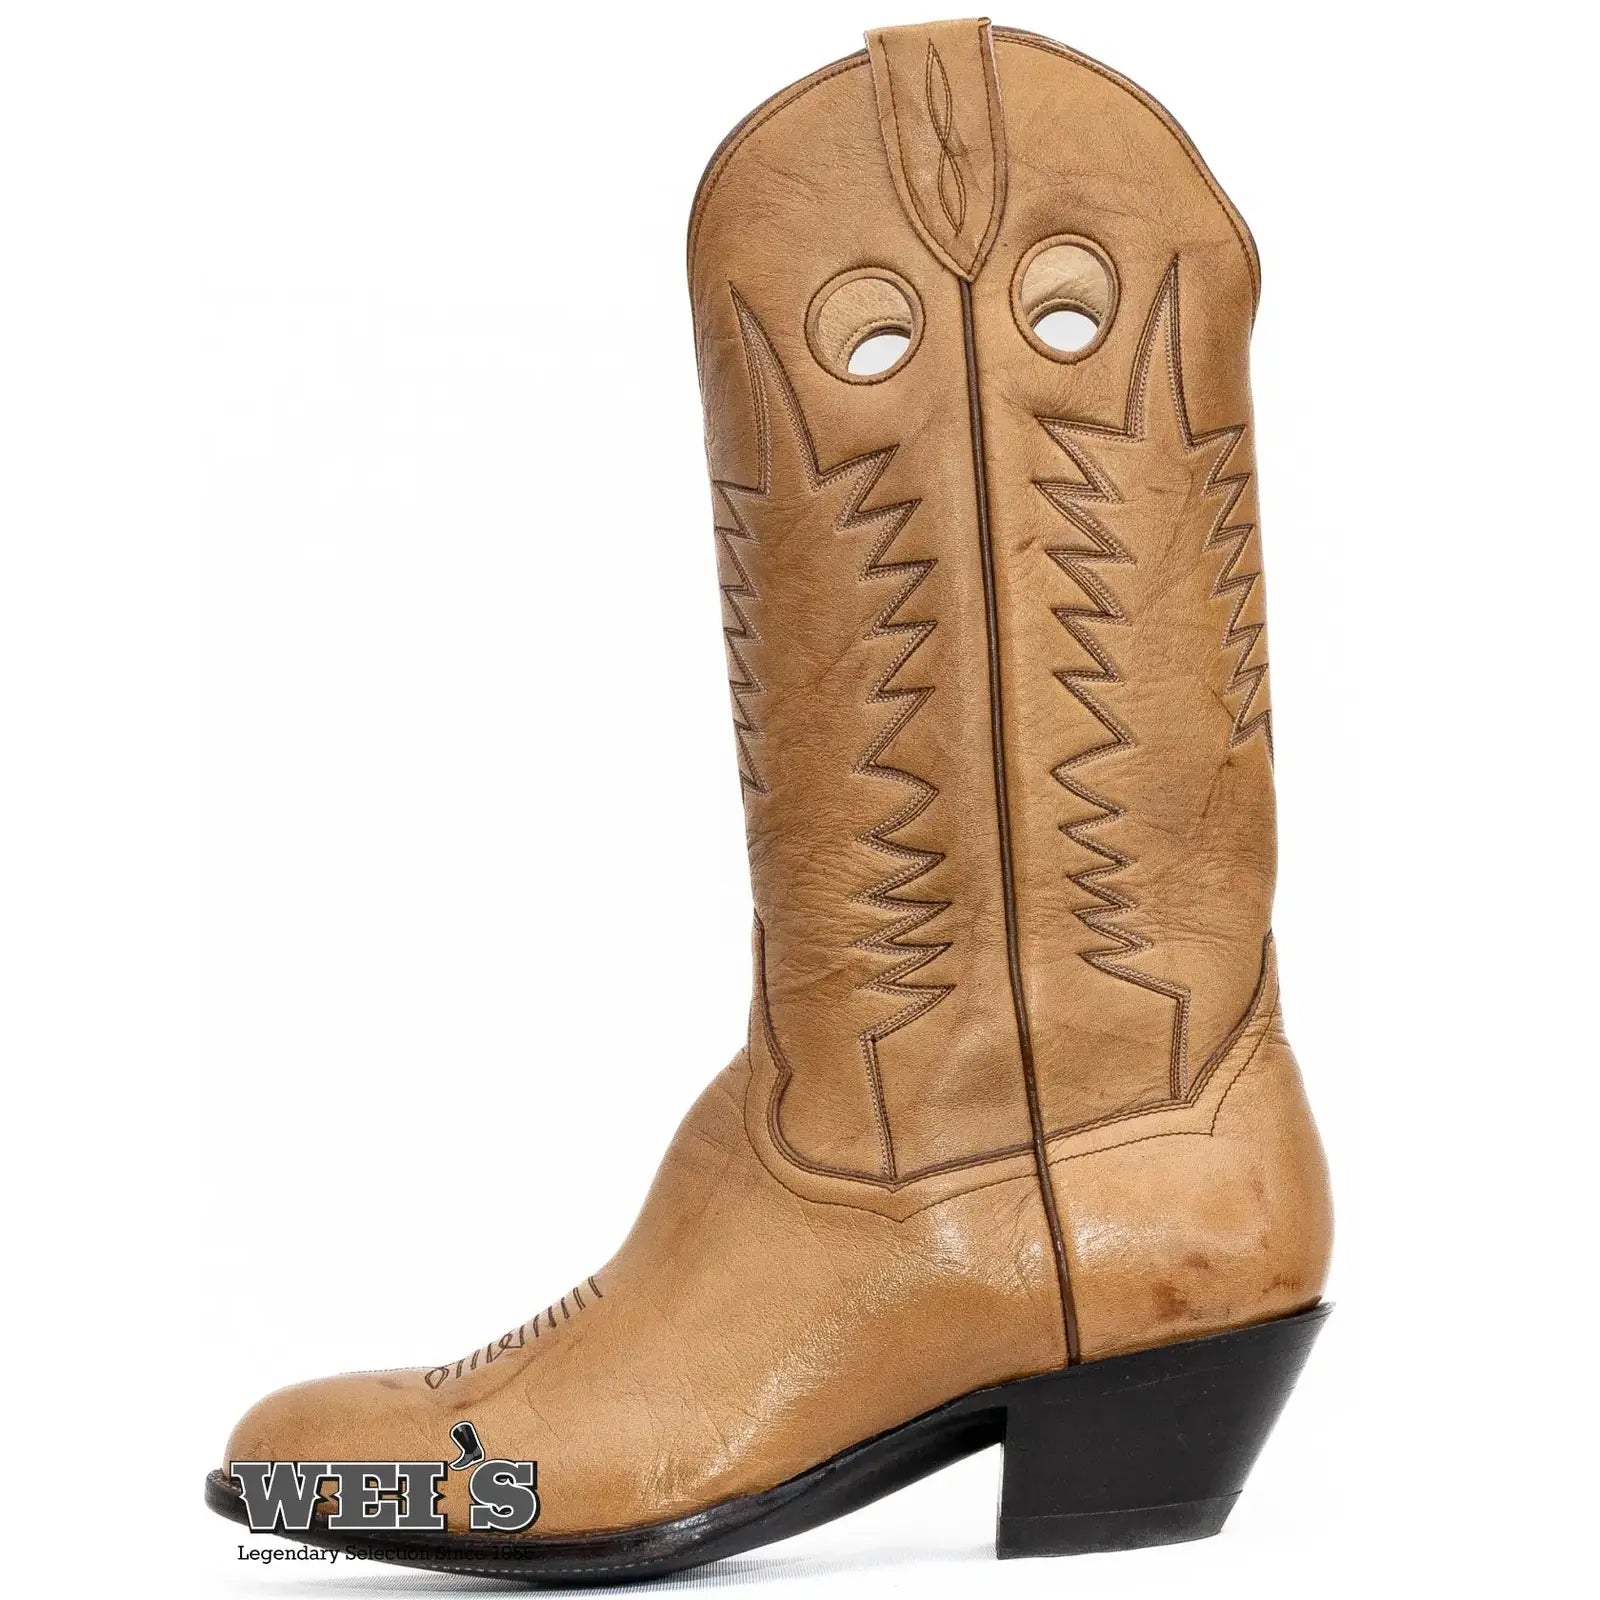 Panhandle Slim Men's Cowboy Boots 13" Cowhide R-toe 22009